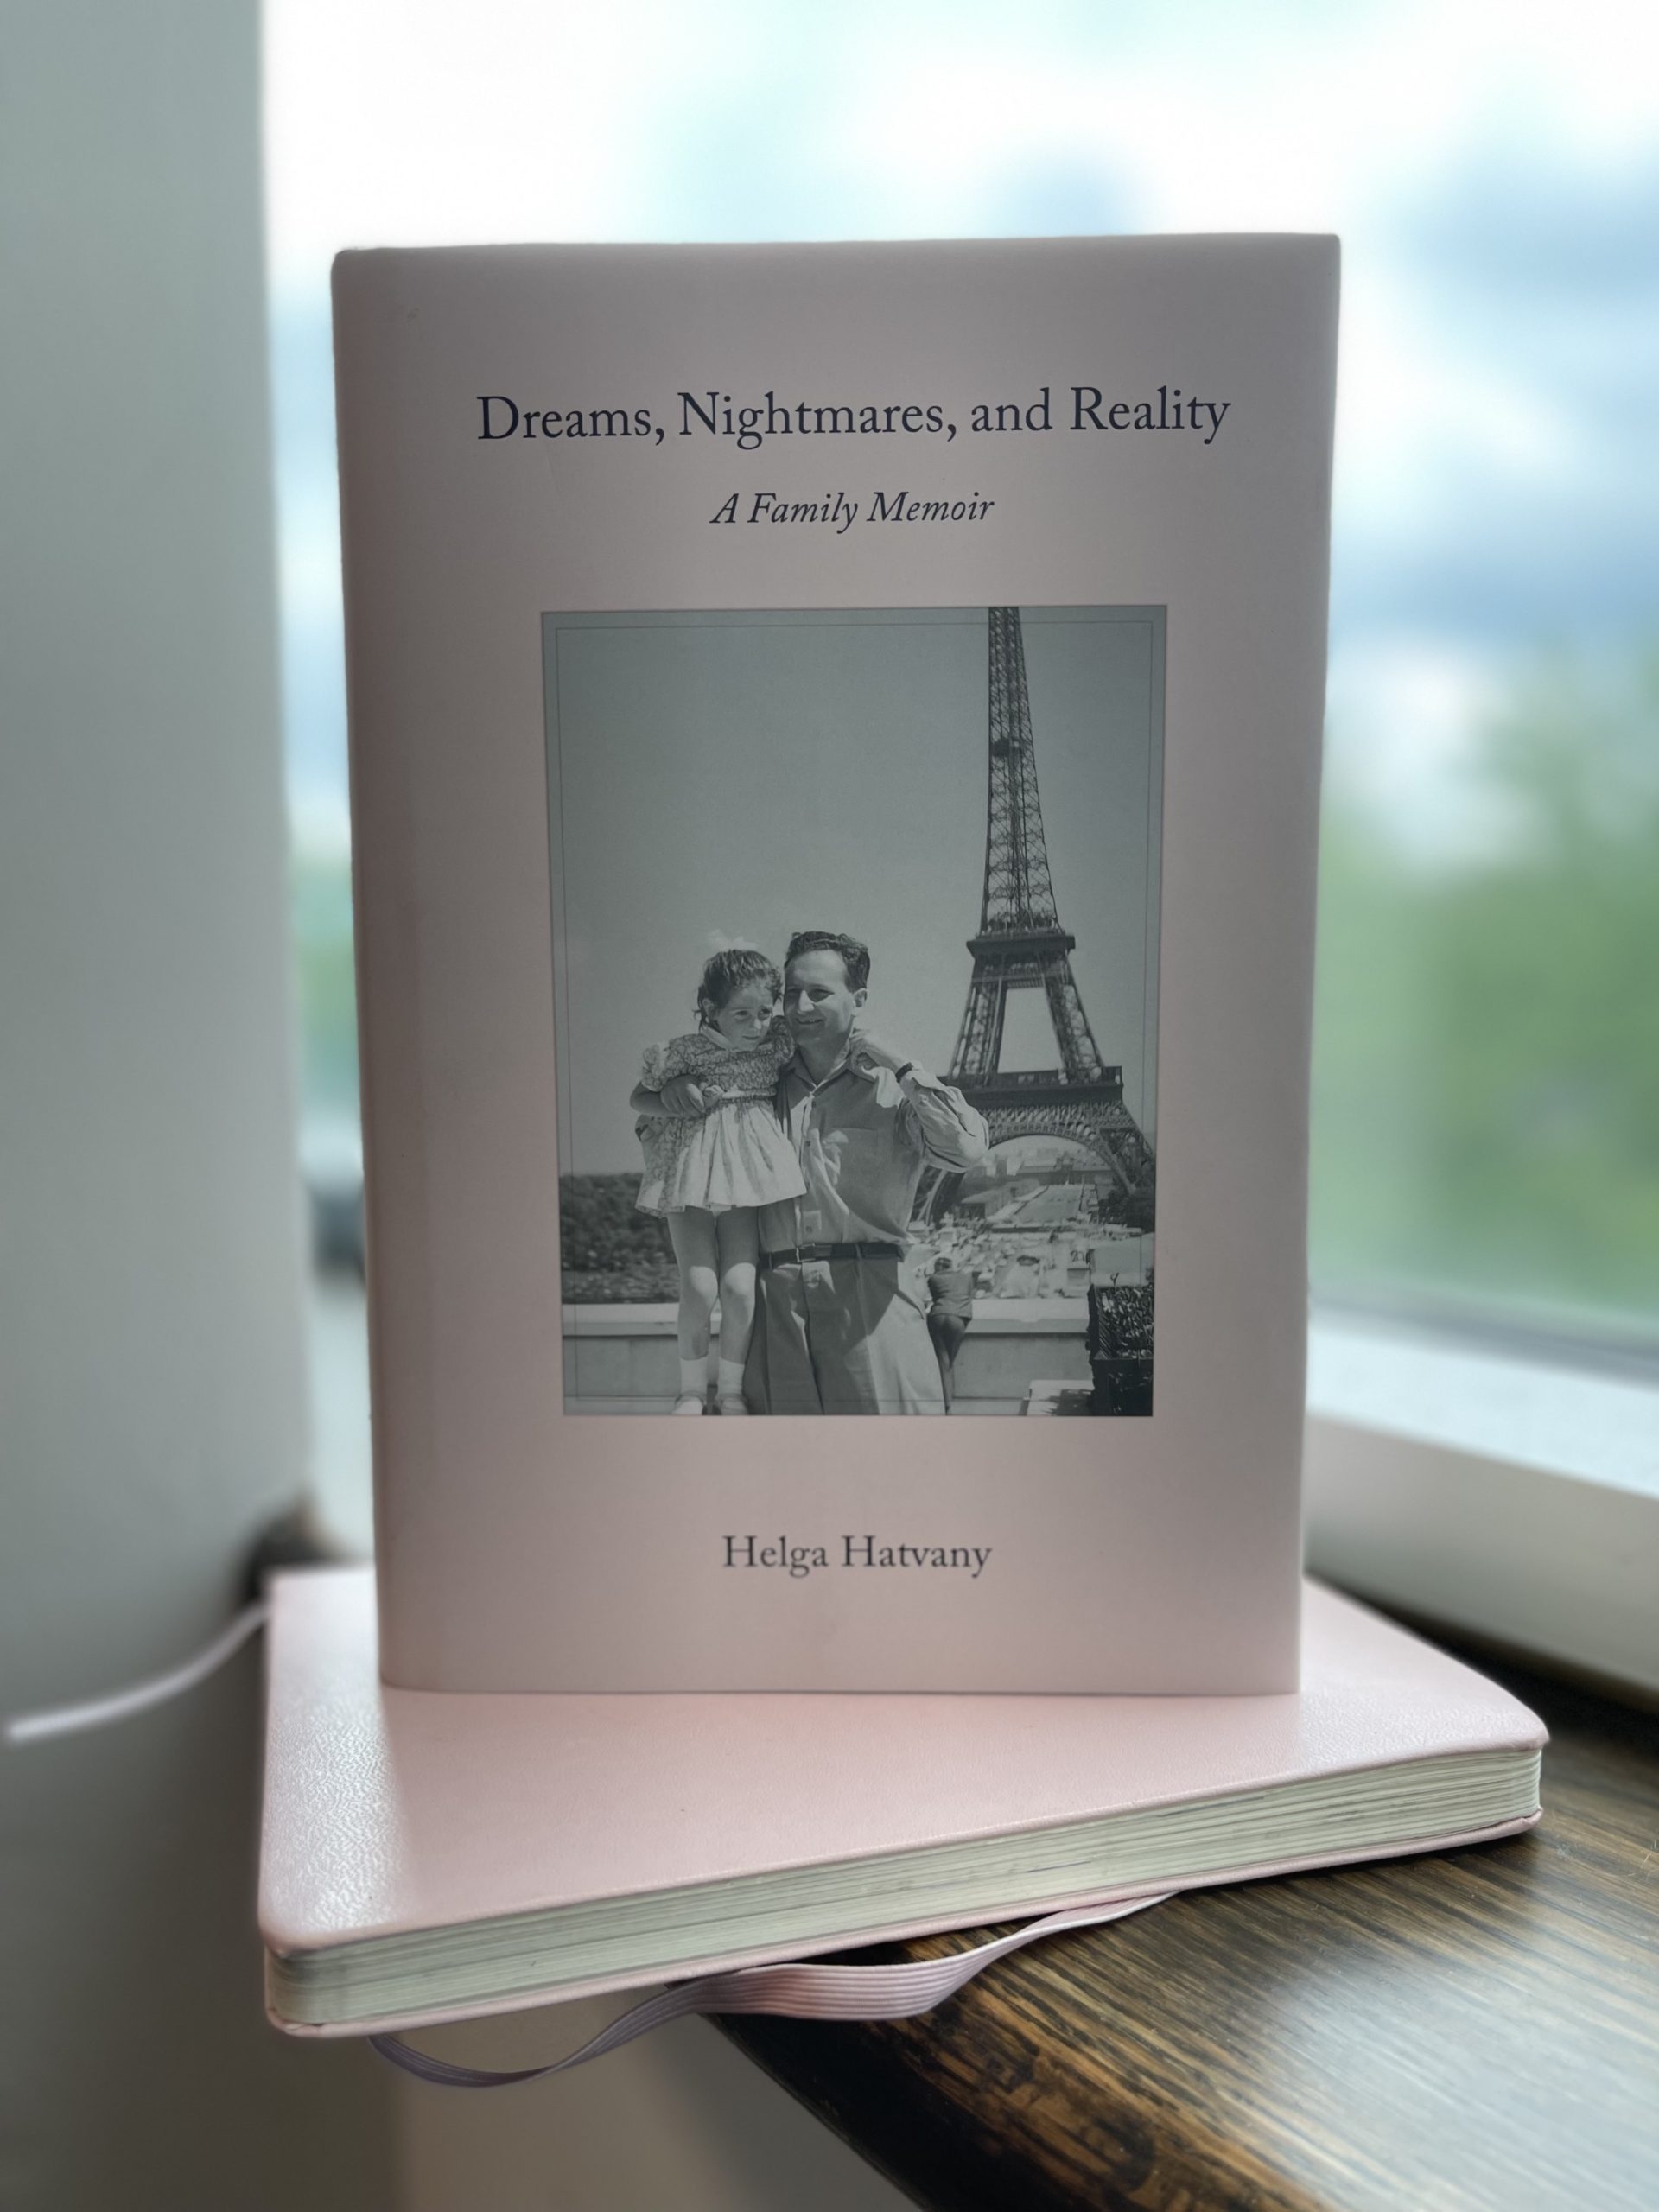 Dreams, Nightmares, and Reality by Helga Hatvany